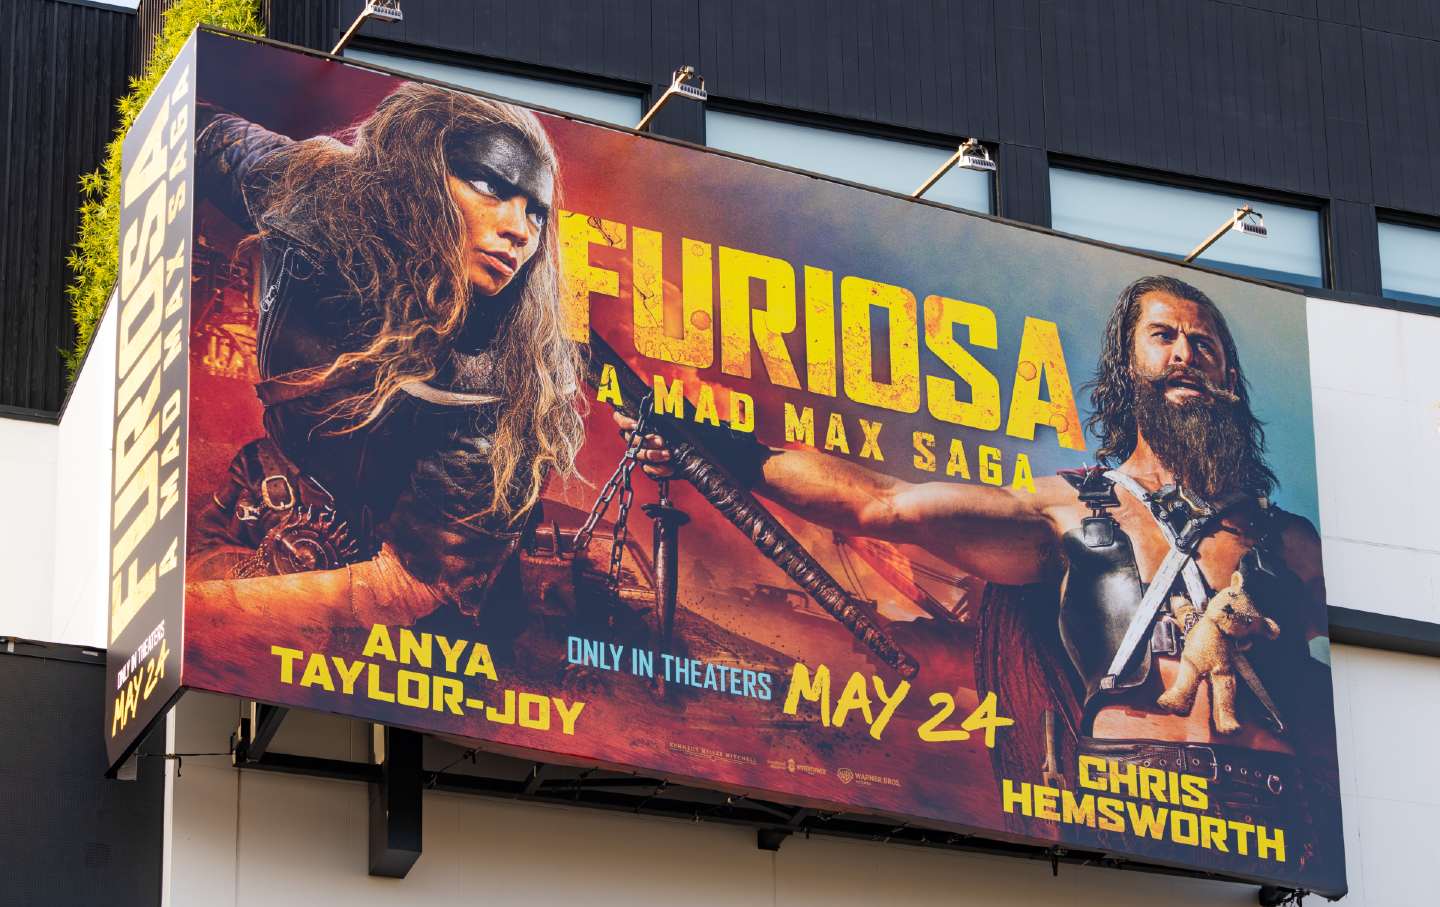 General views of the “Furiosa: A Mad Max Saga” skyscraper billboard campaign in Hollywood, California.